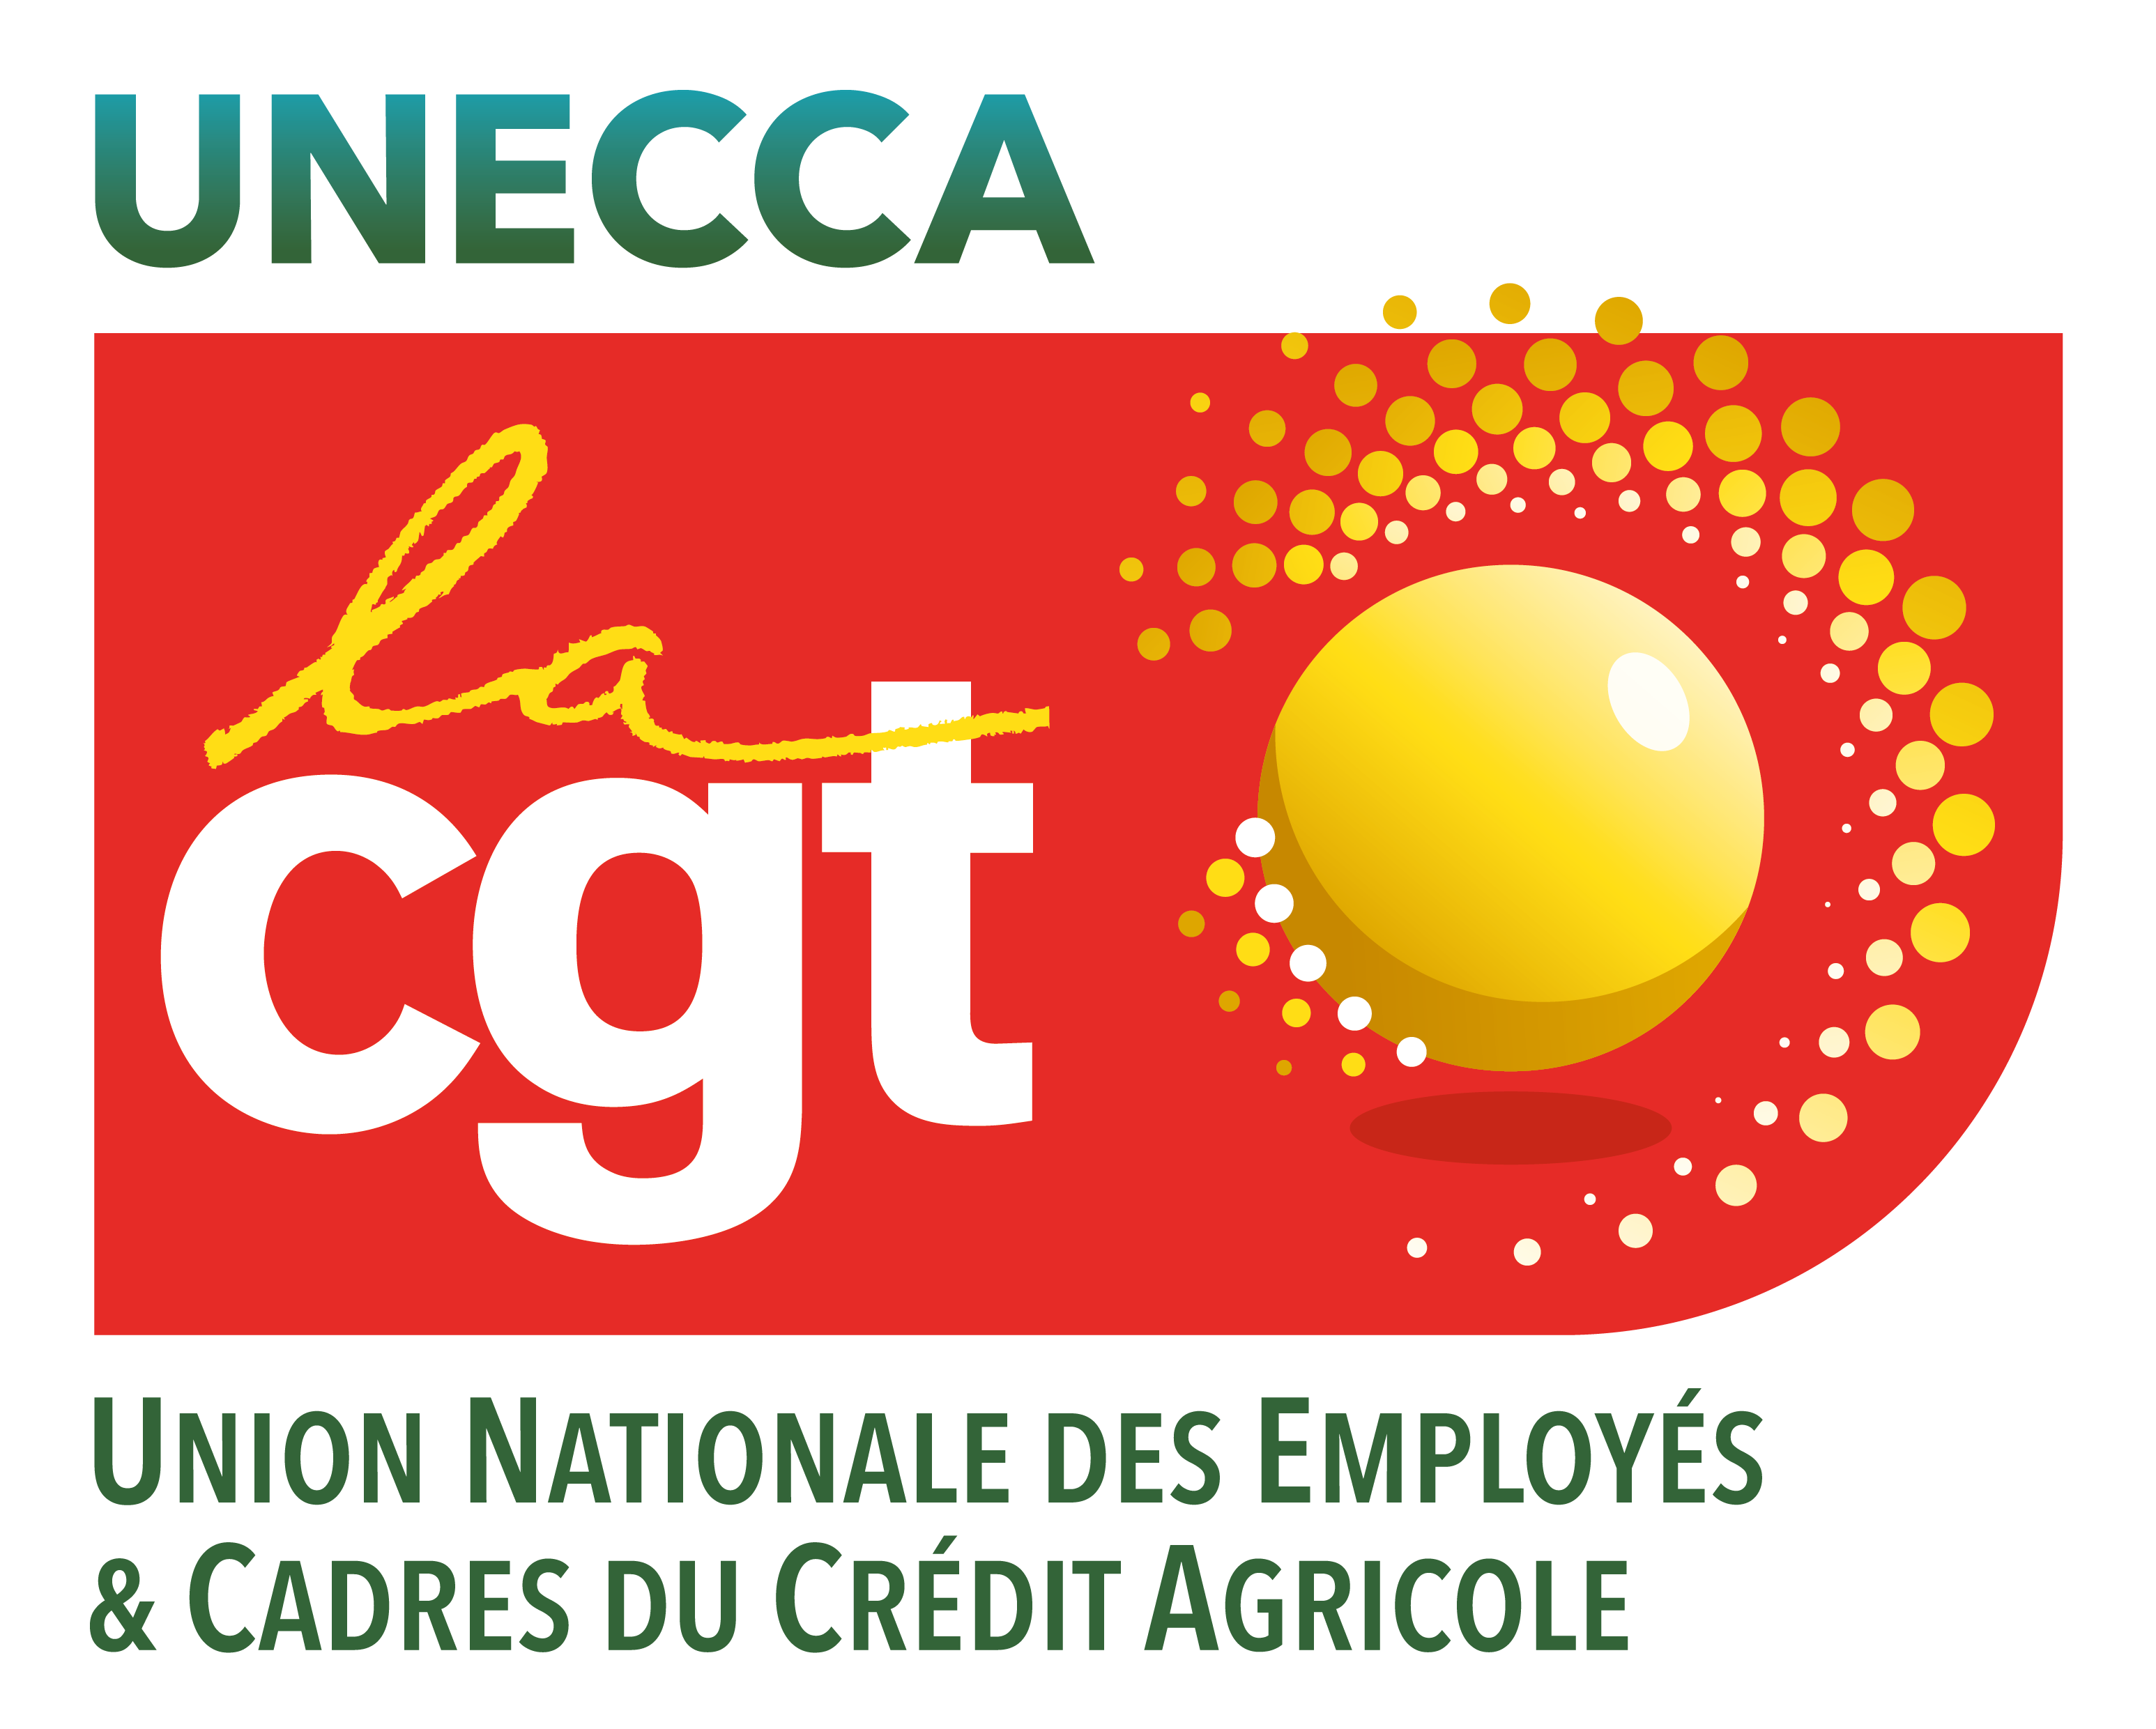 UNECCA CGT